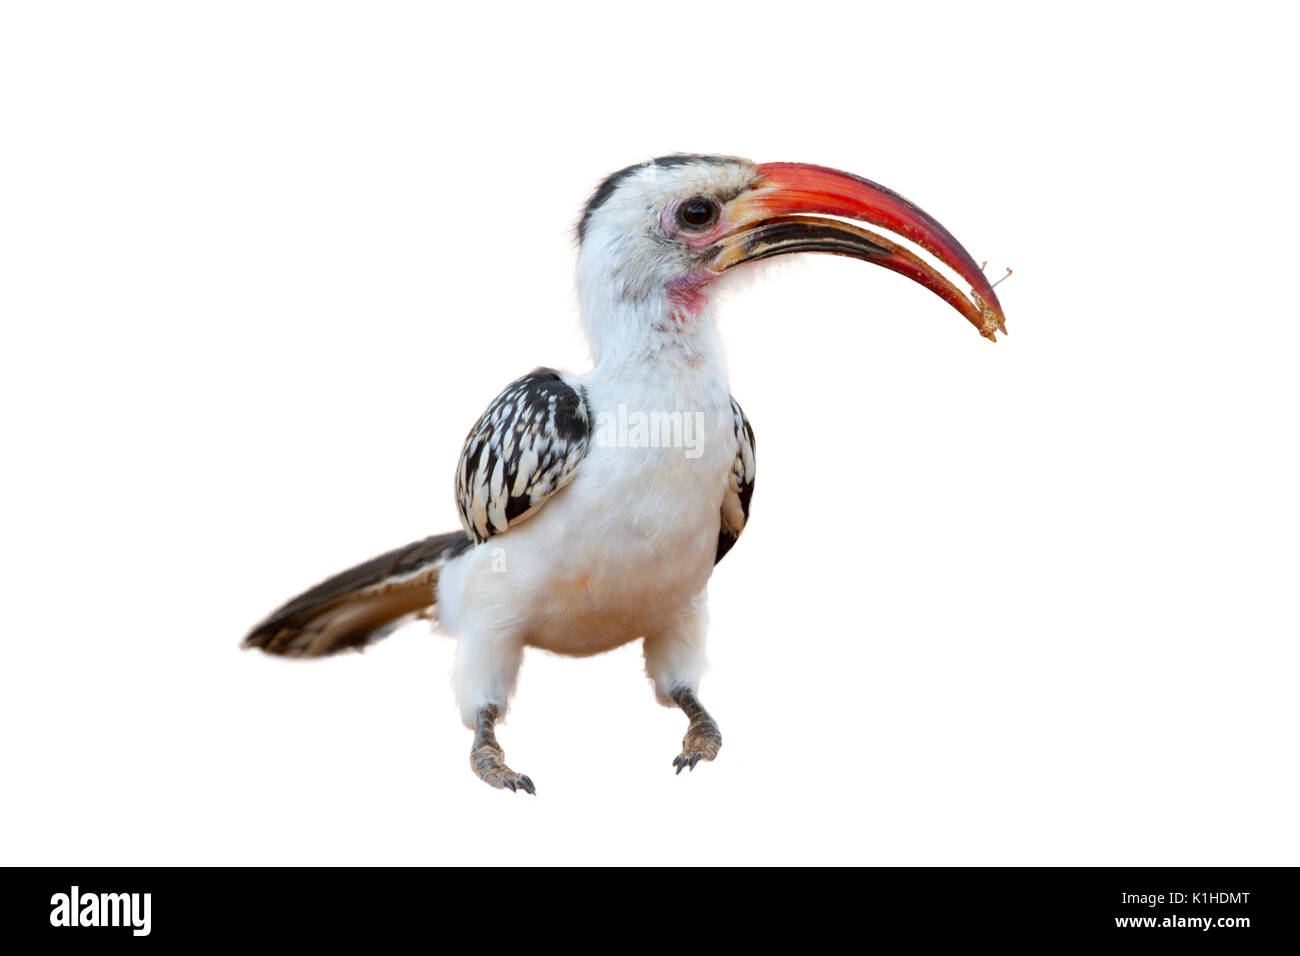 Red-billed hornbill (Tockus erythrorhynchus) eating a grasshopper, isolated on white background. Stock Photo